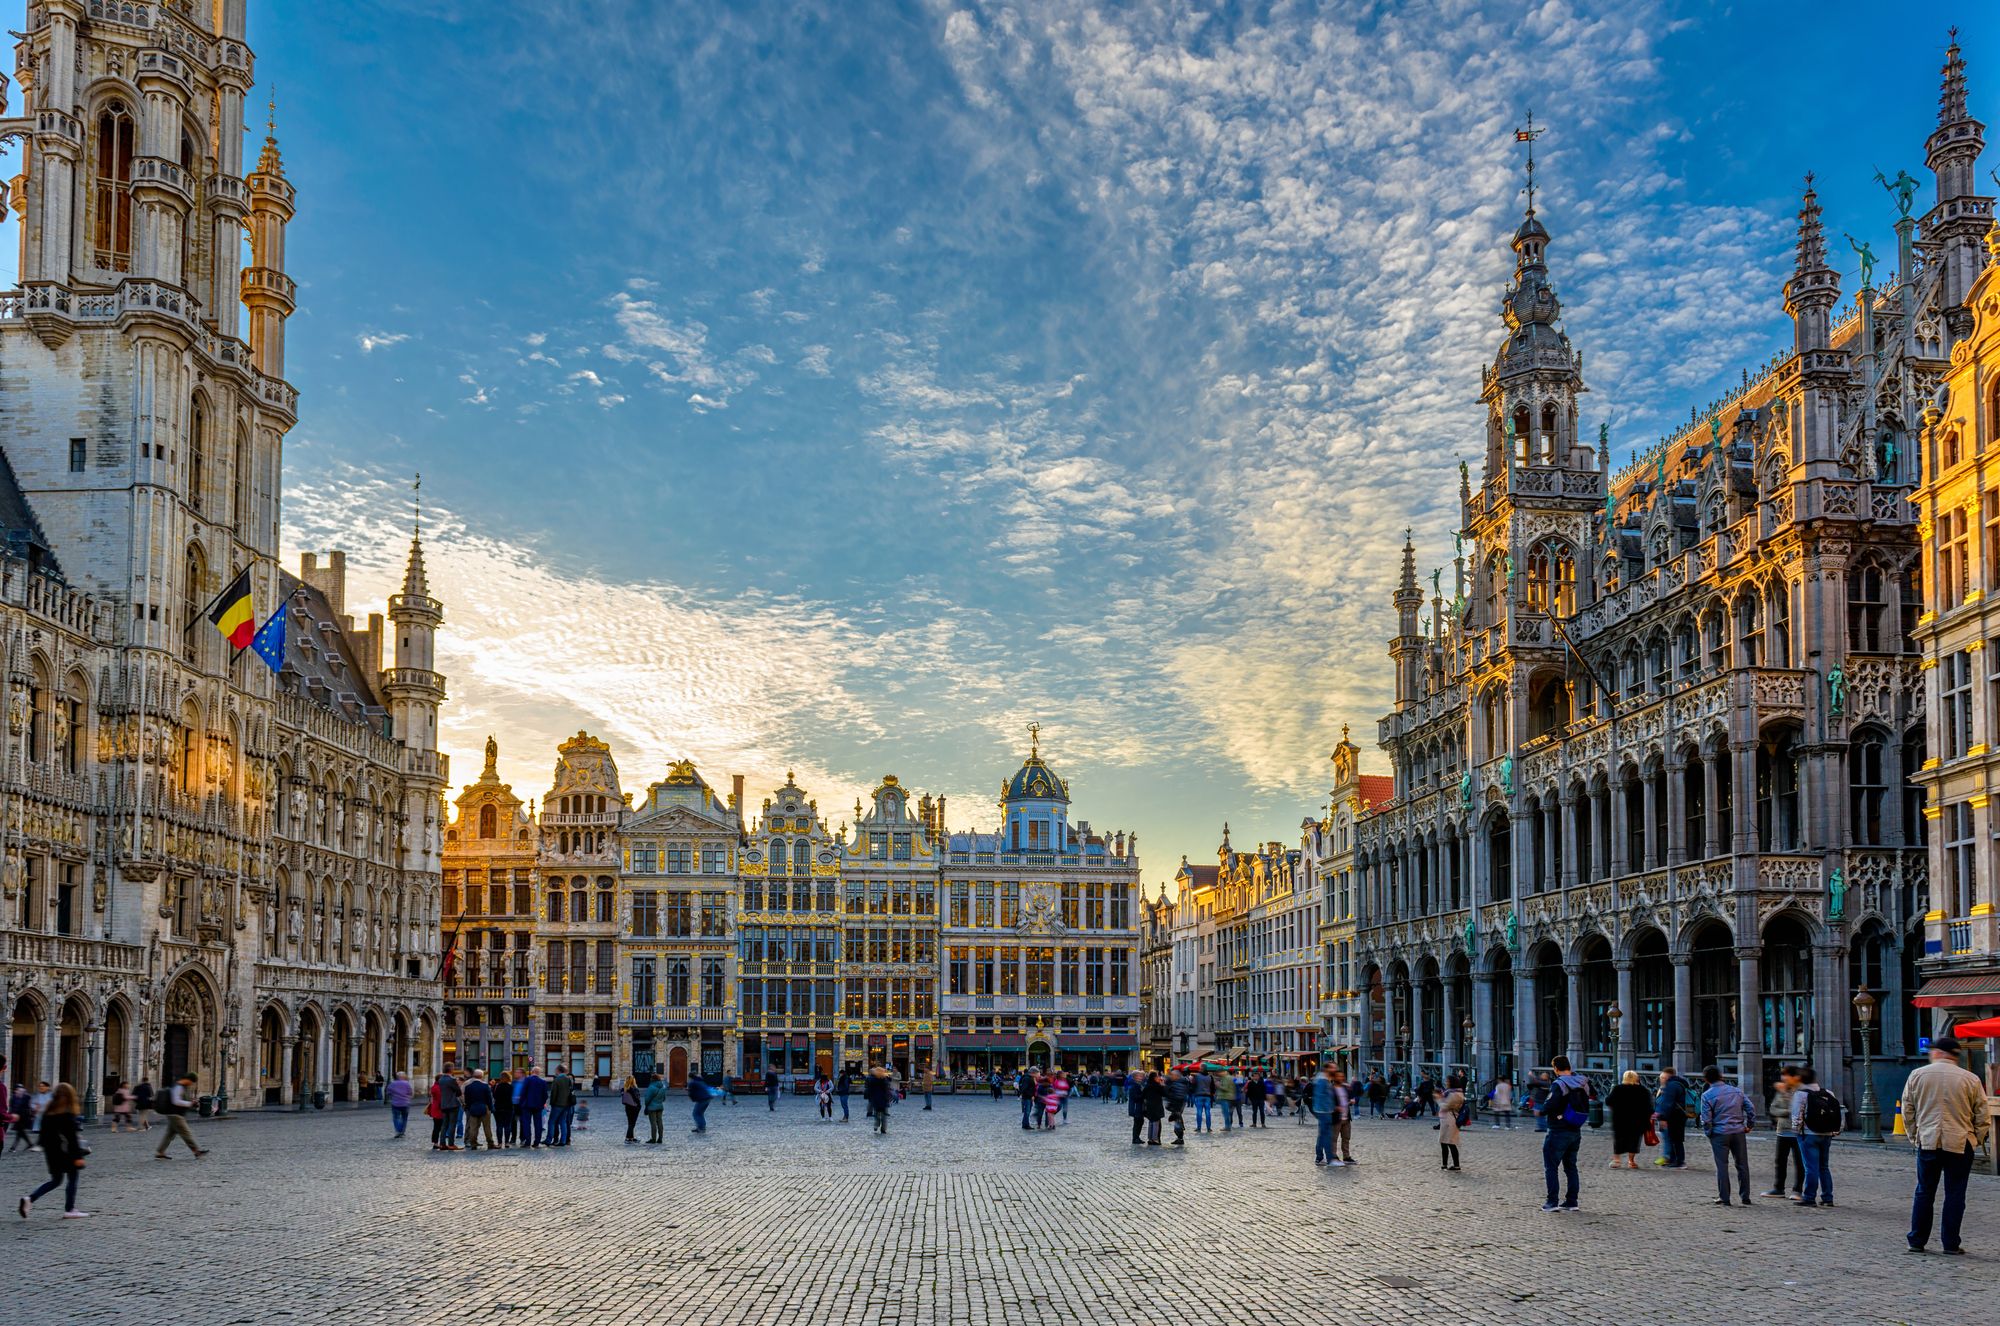 21 fun facts about Belgium